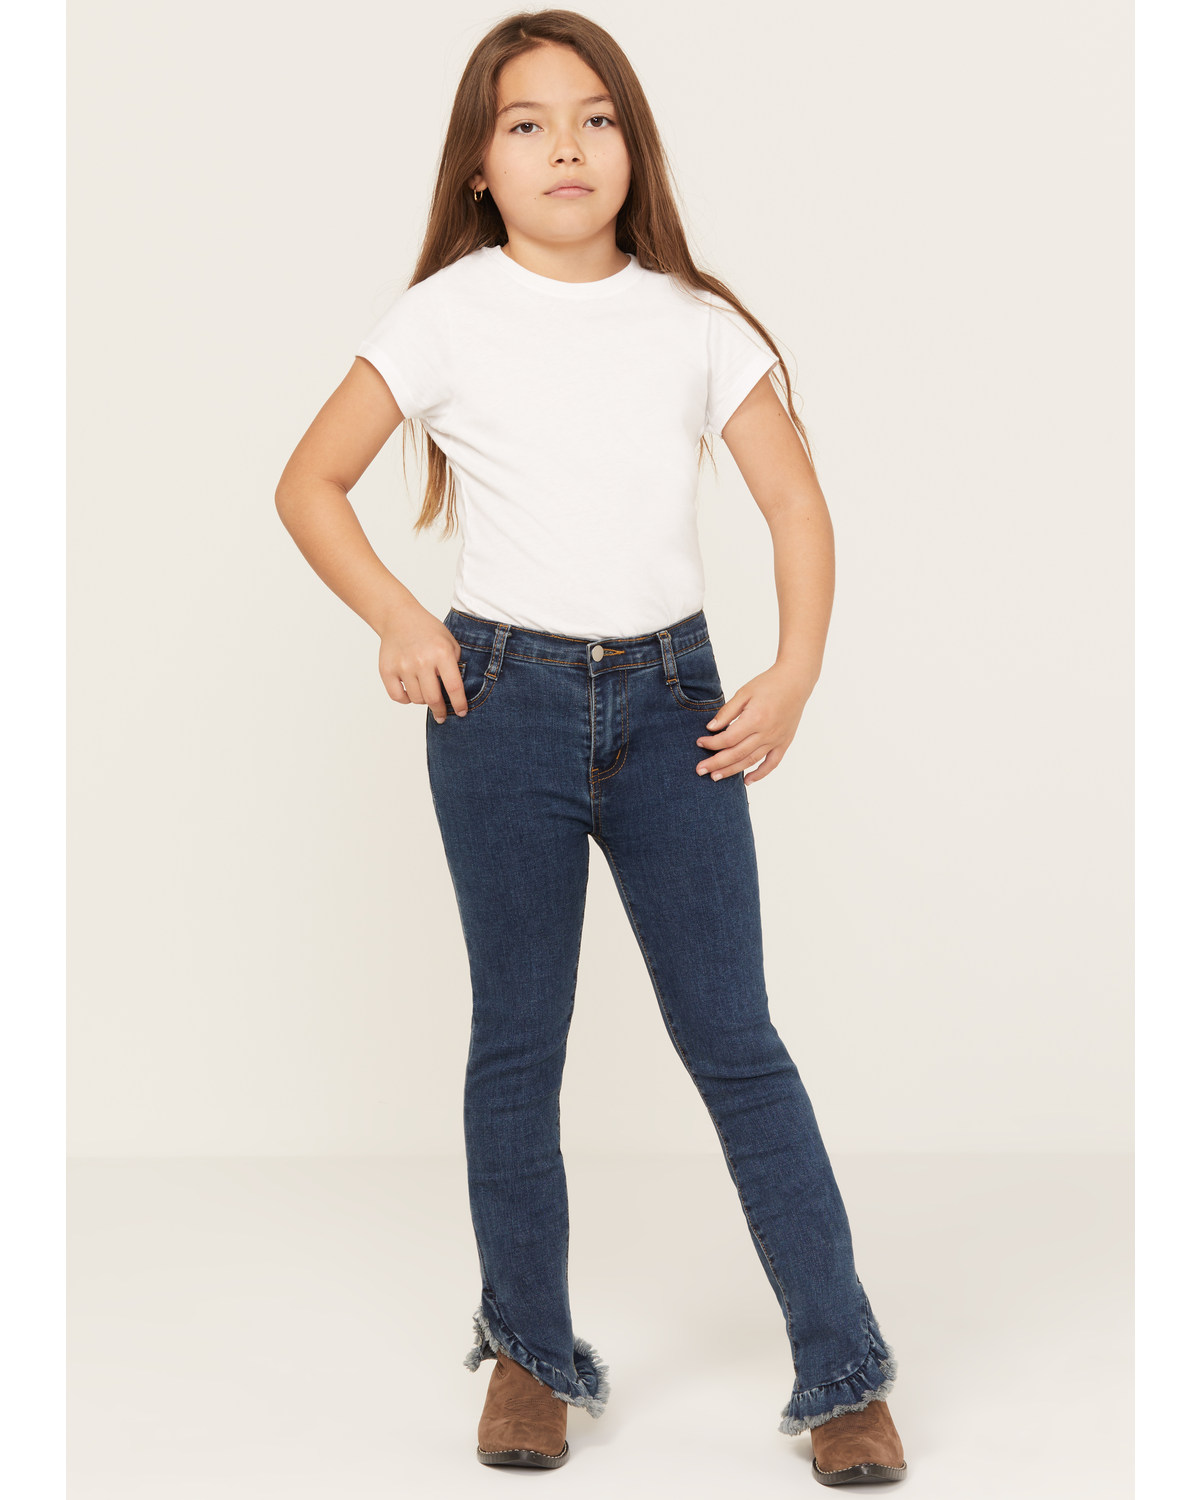 Hayden Girls' Medium Wash Ruffle Skinny Jeans